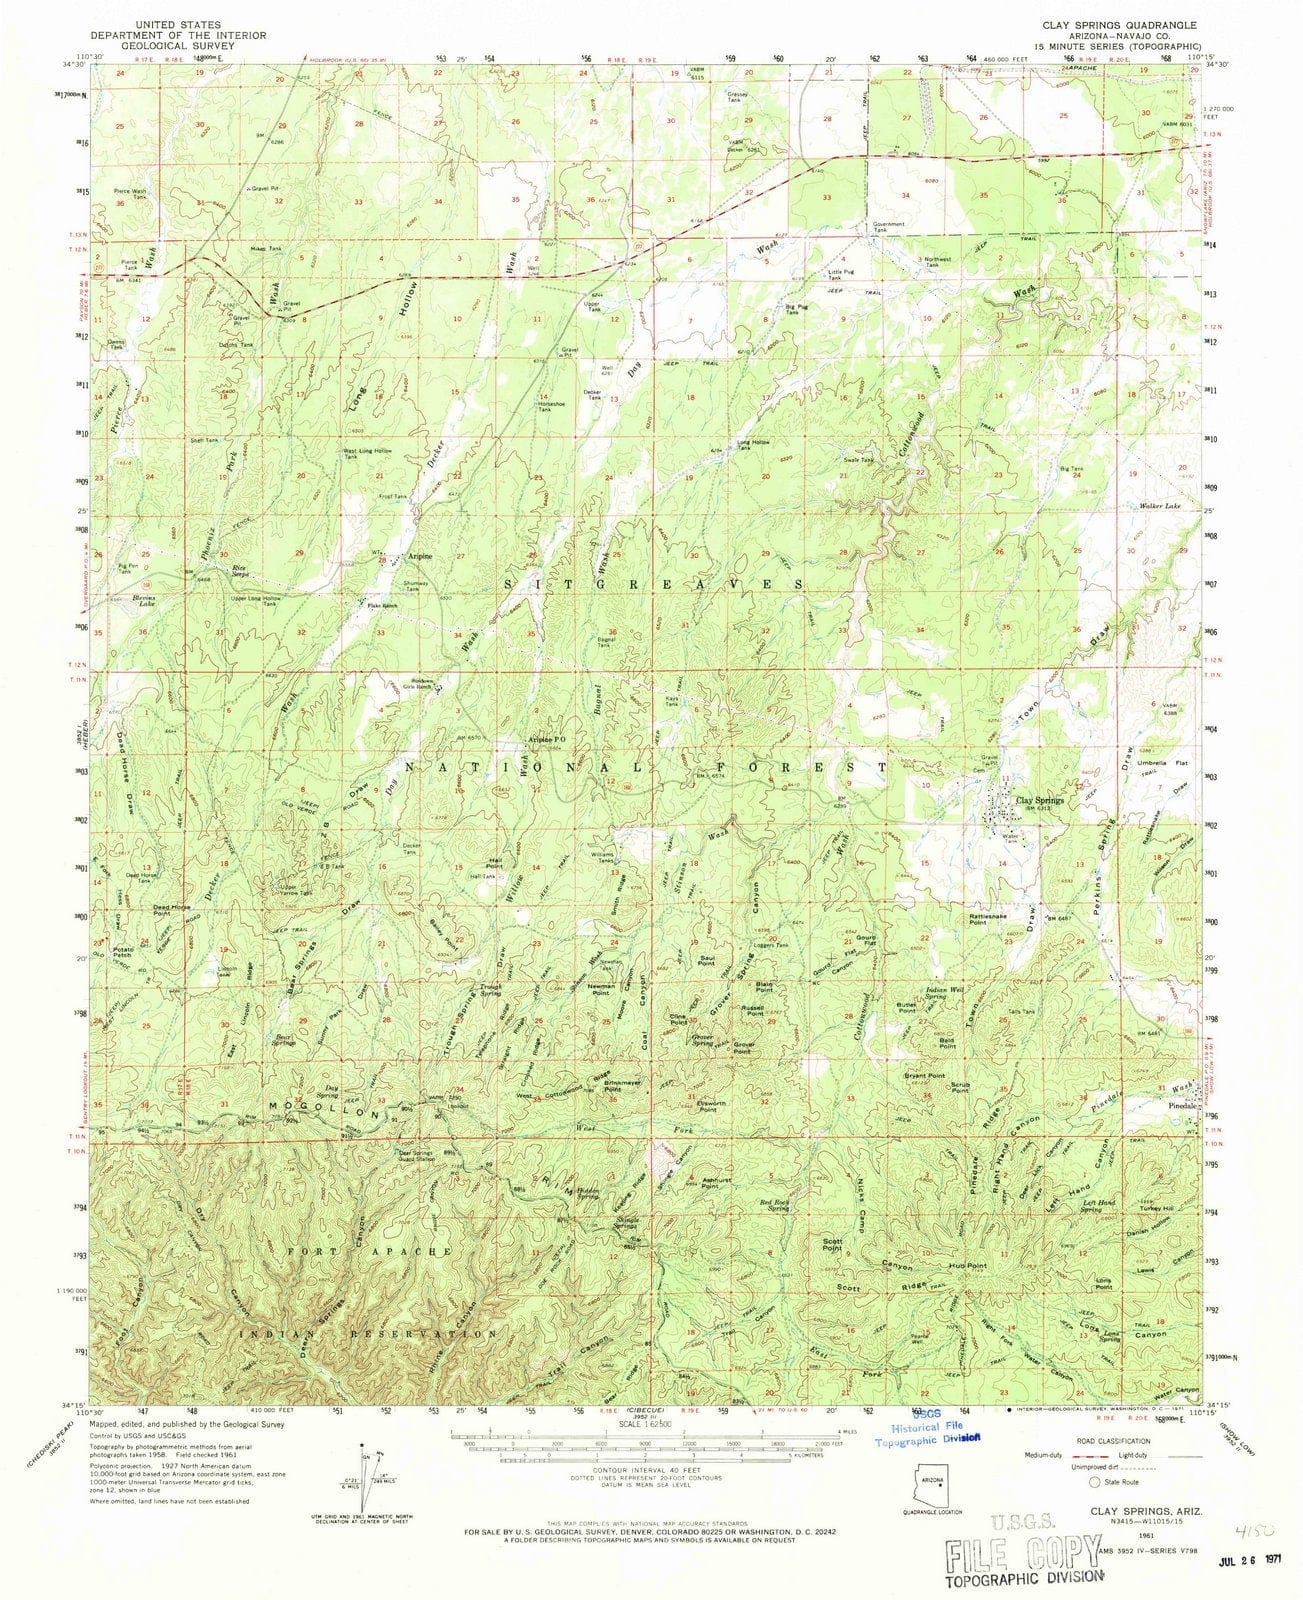 1961 Clay Springs, AZ - Arizona - USGS Topographic Map